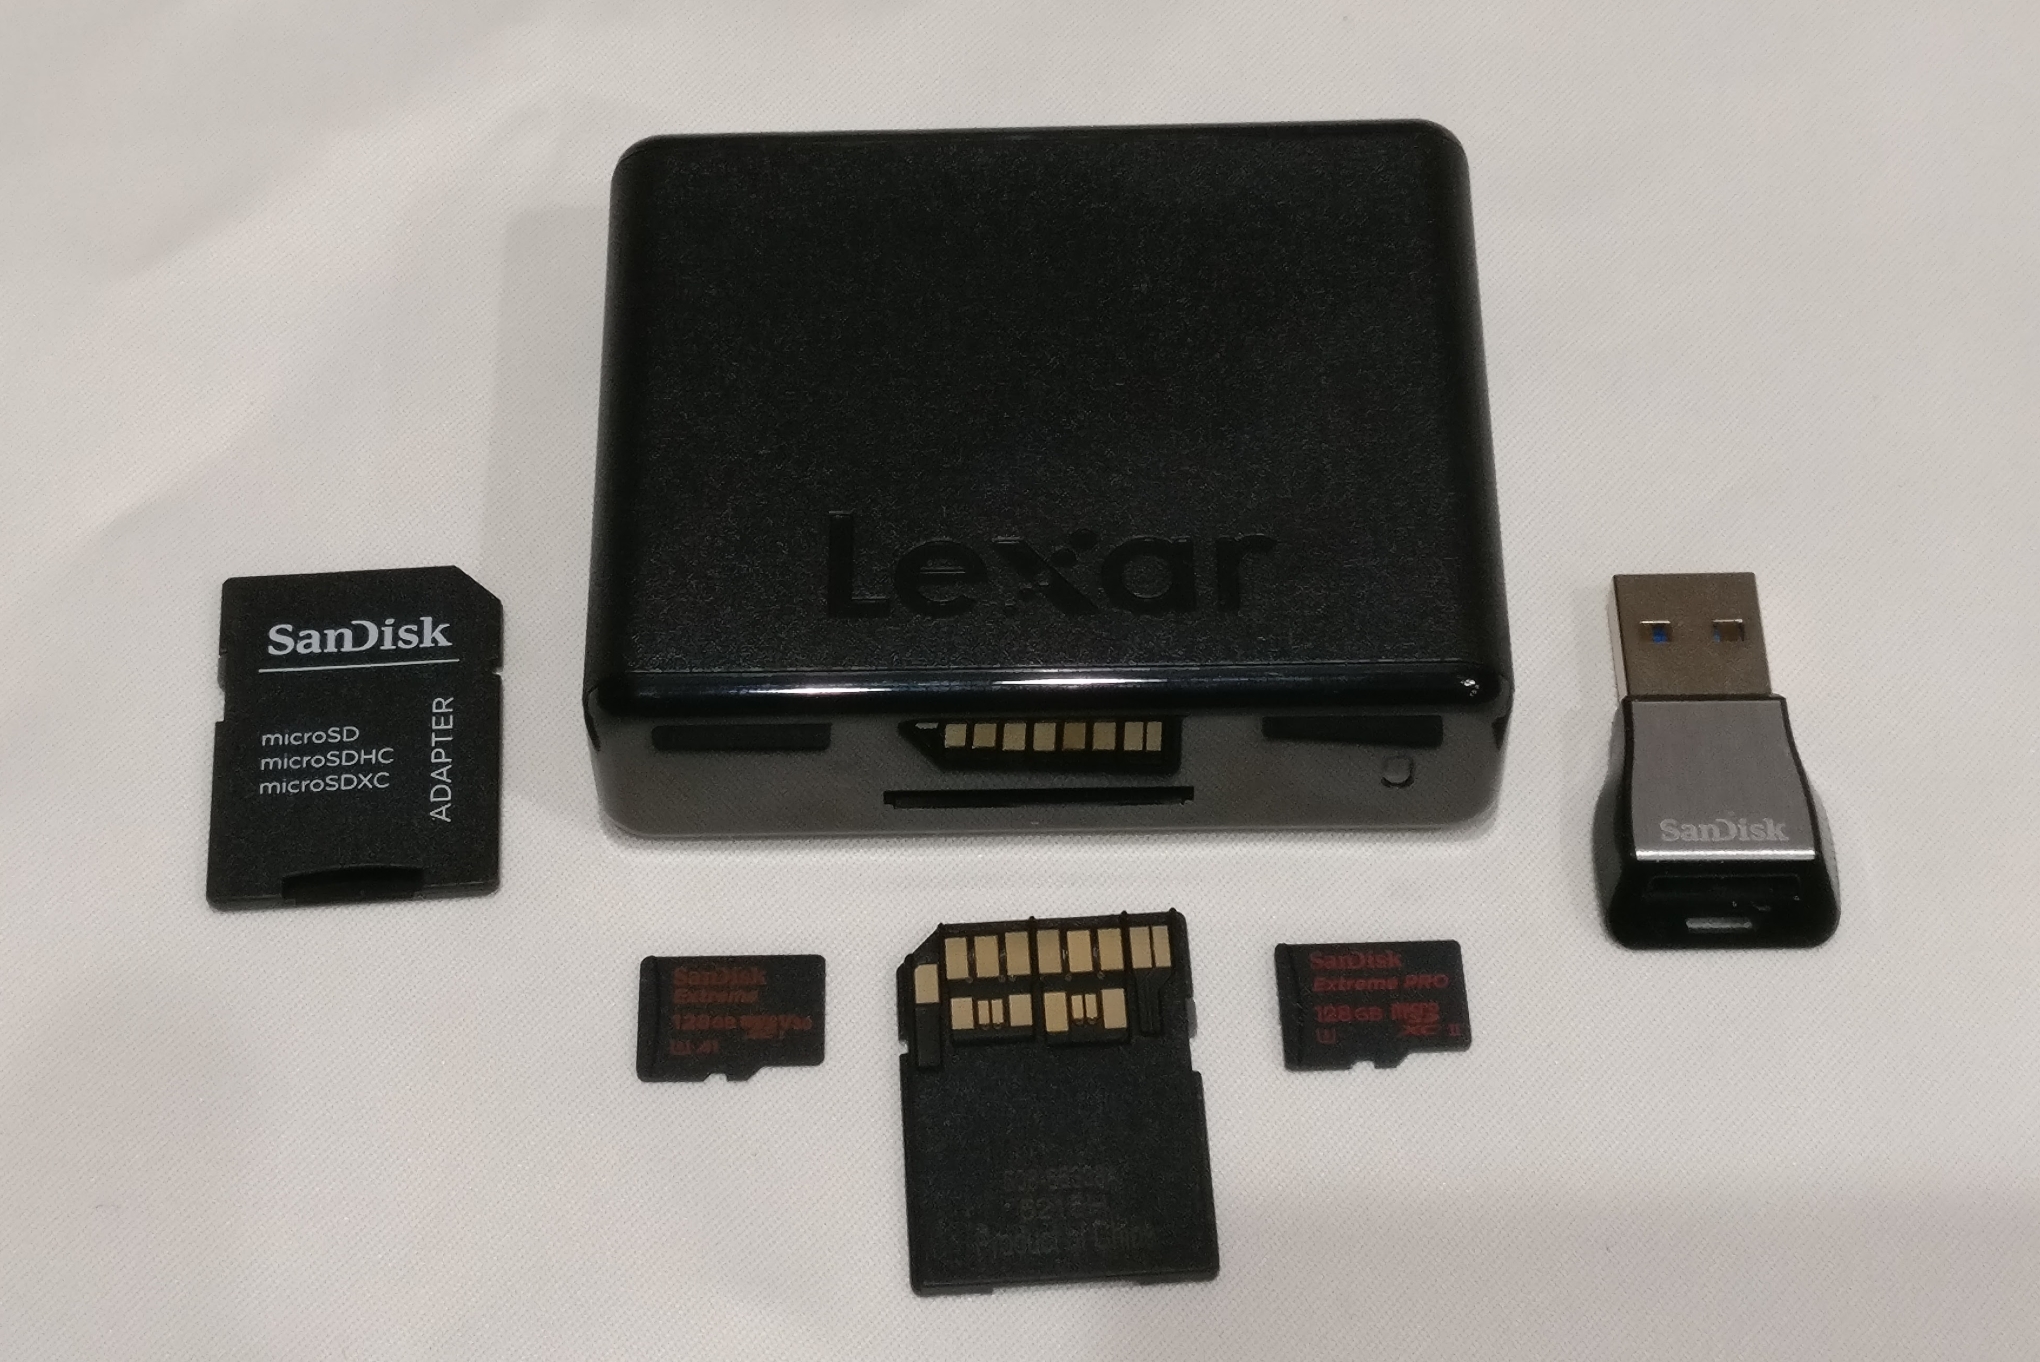 Carte SD SanDisk Extreme microSDXC 512 Go + Adaptateur